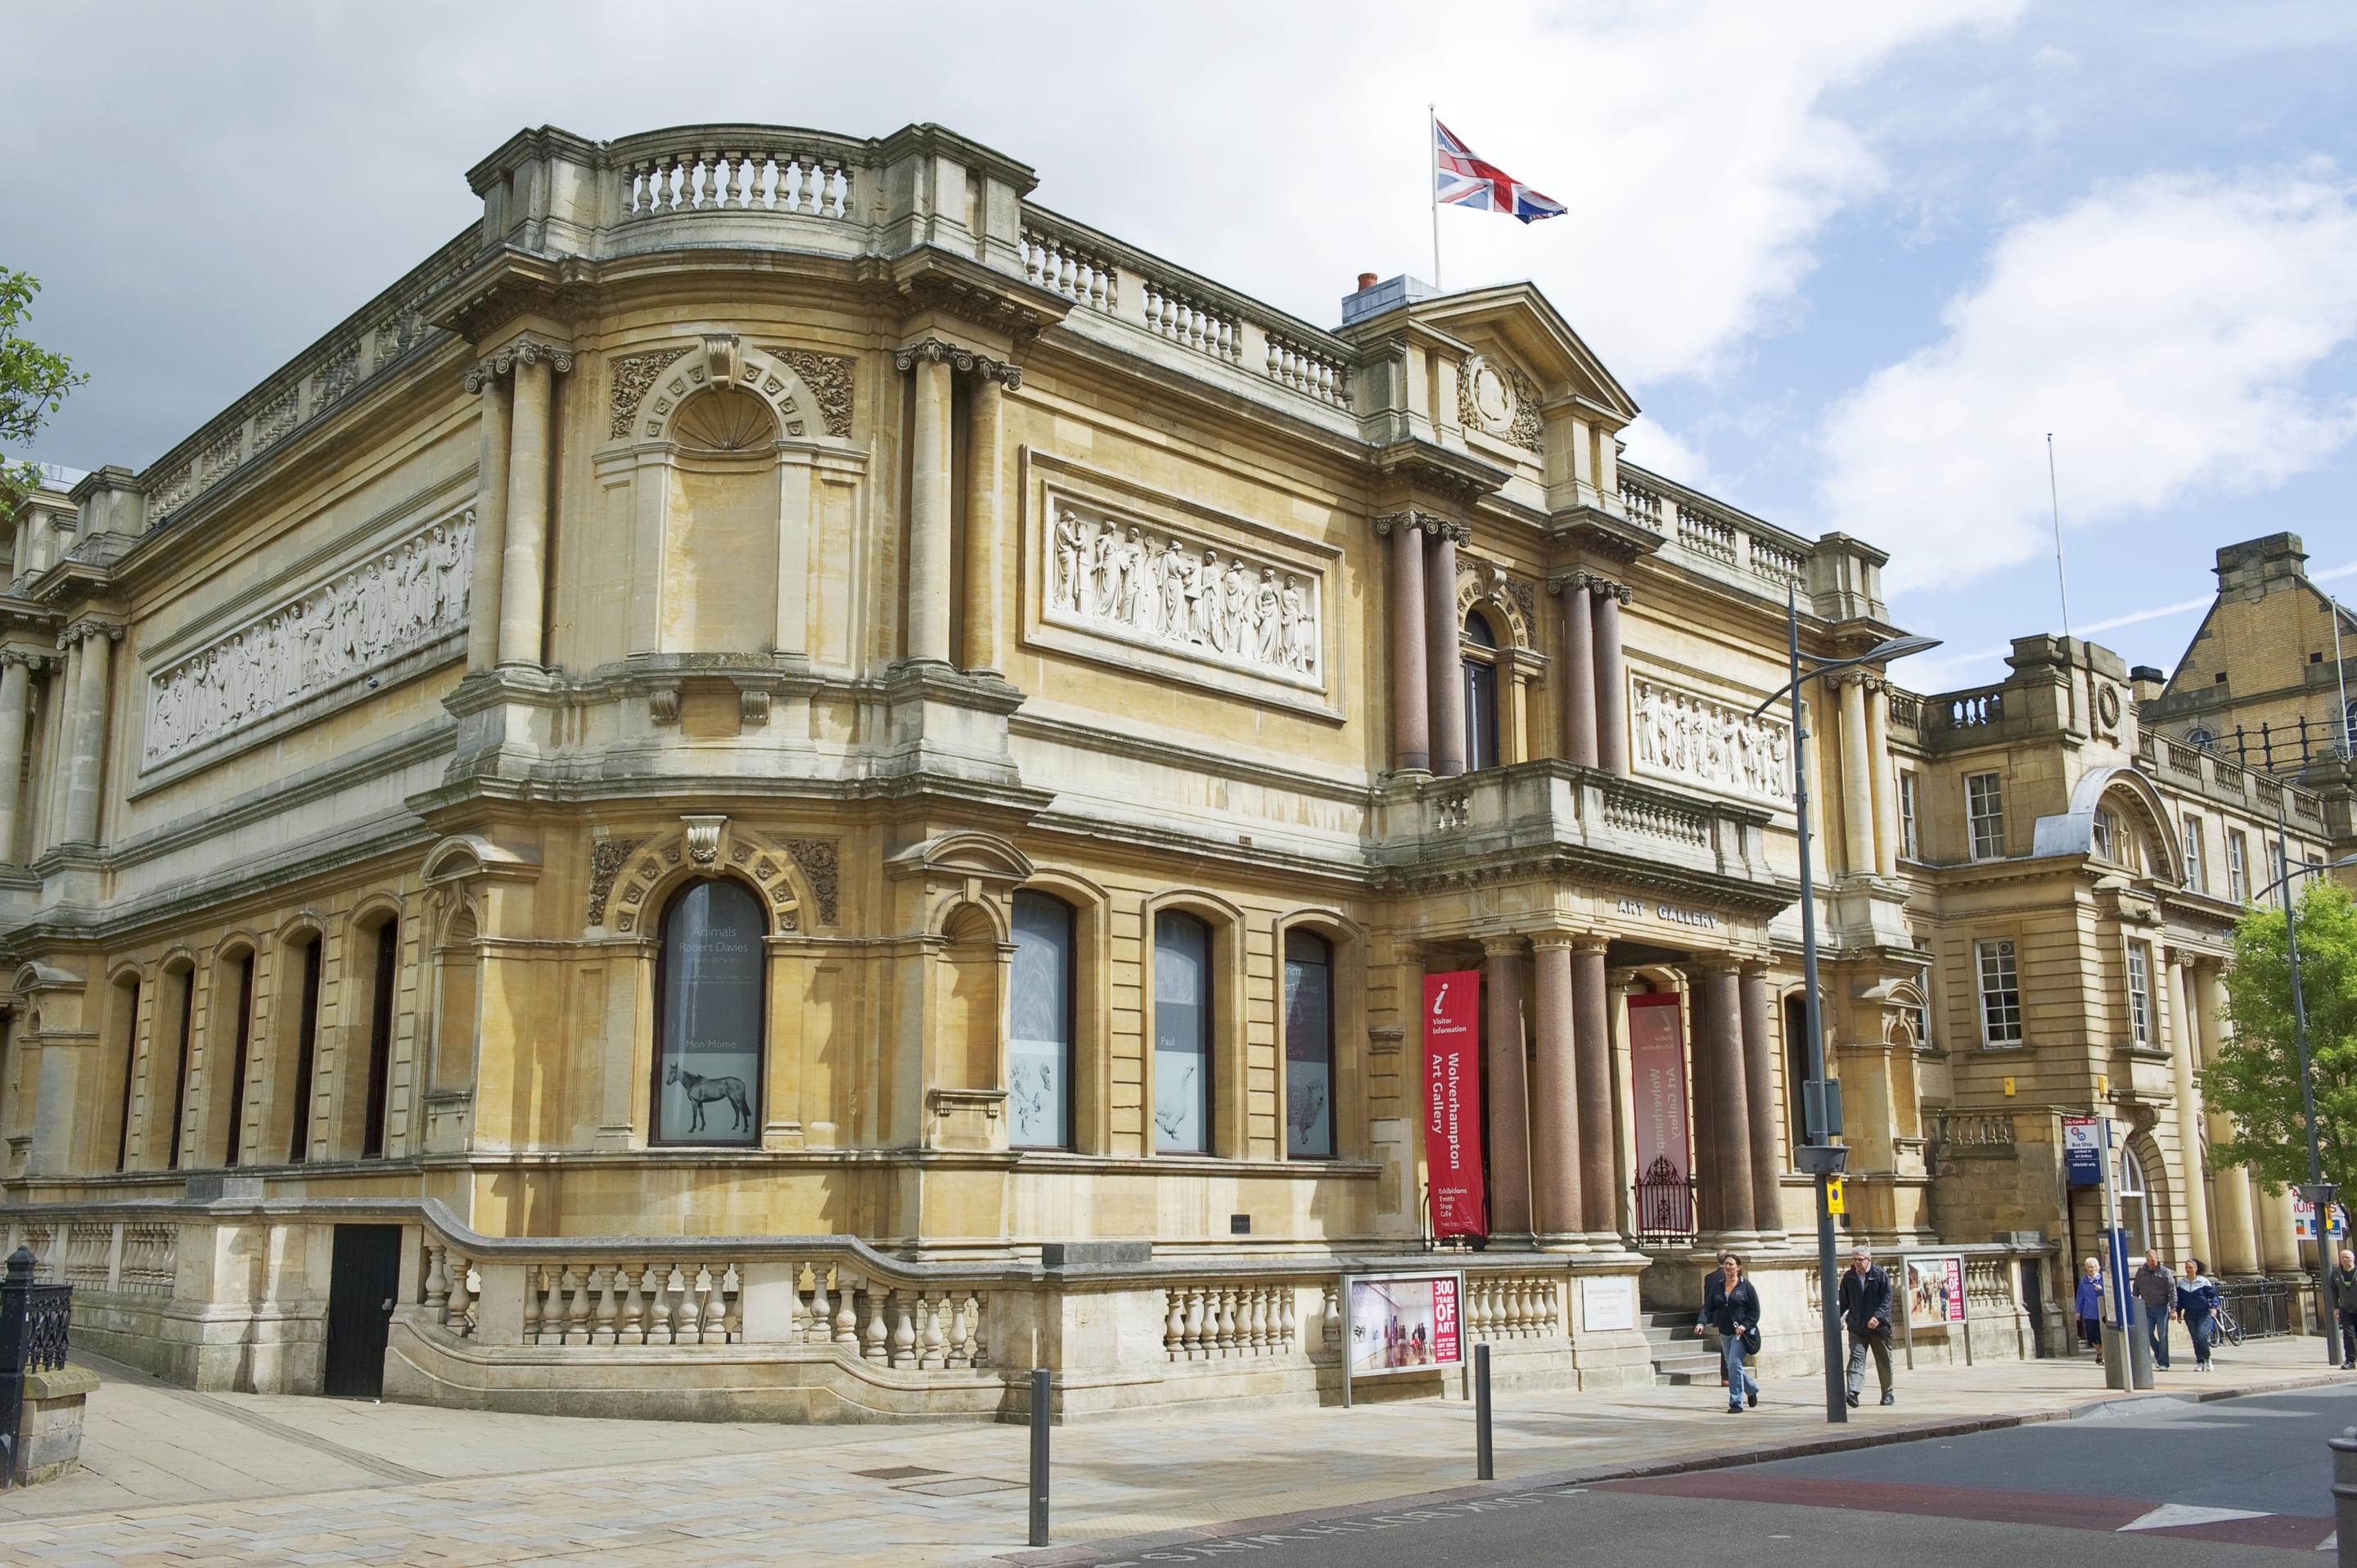 Wolverhampton Art Gallery Overview